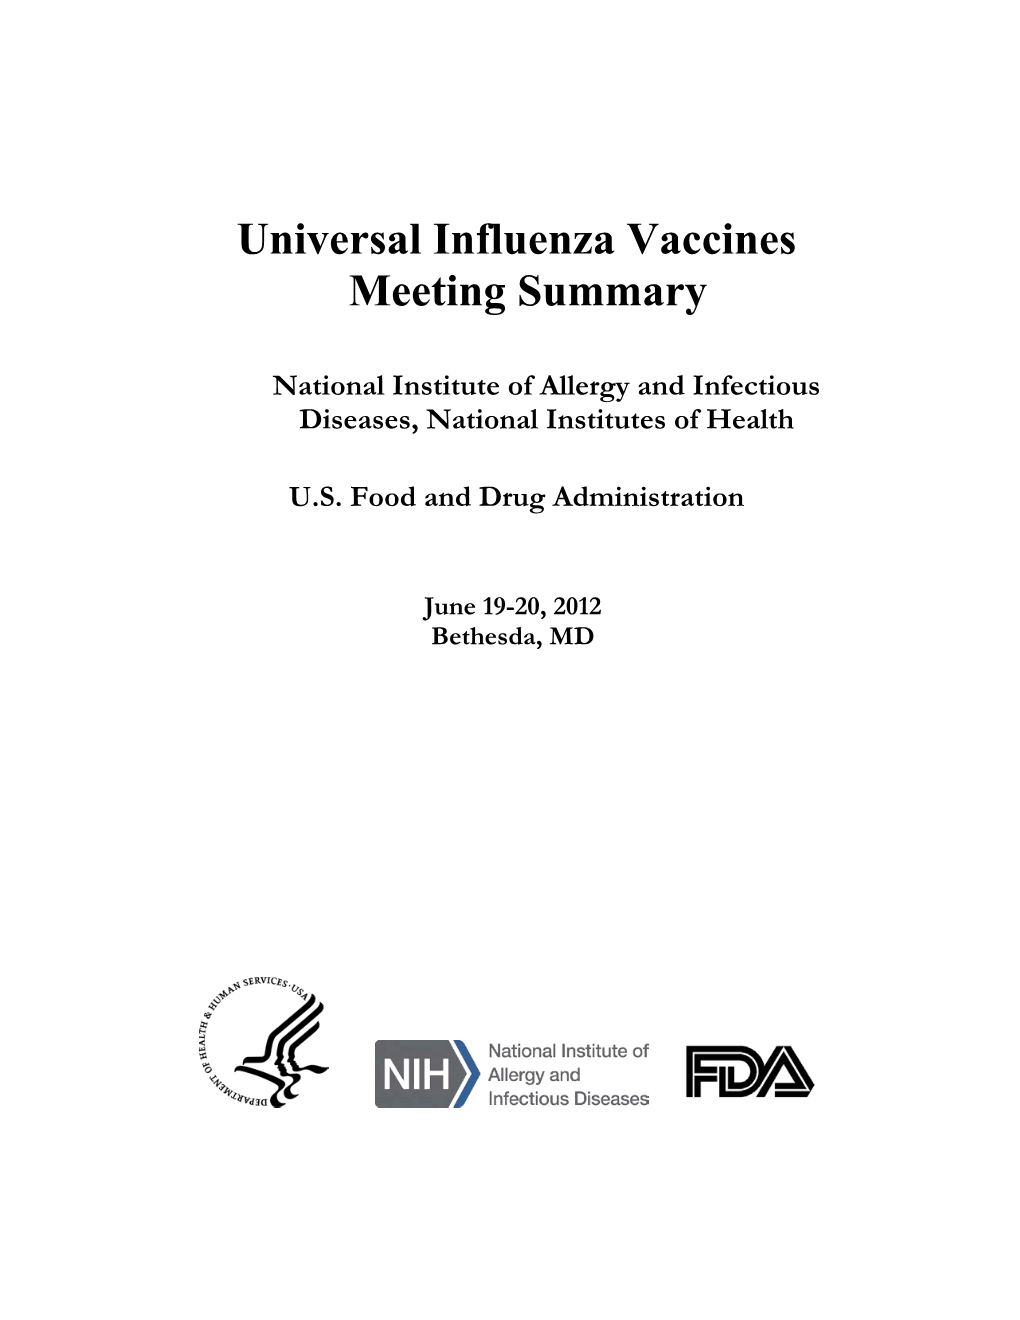 Universal Influenza Vaccines Meeting Summary